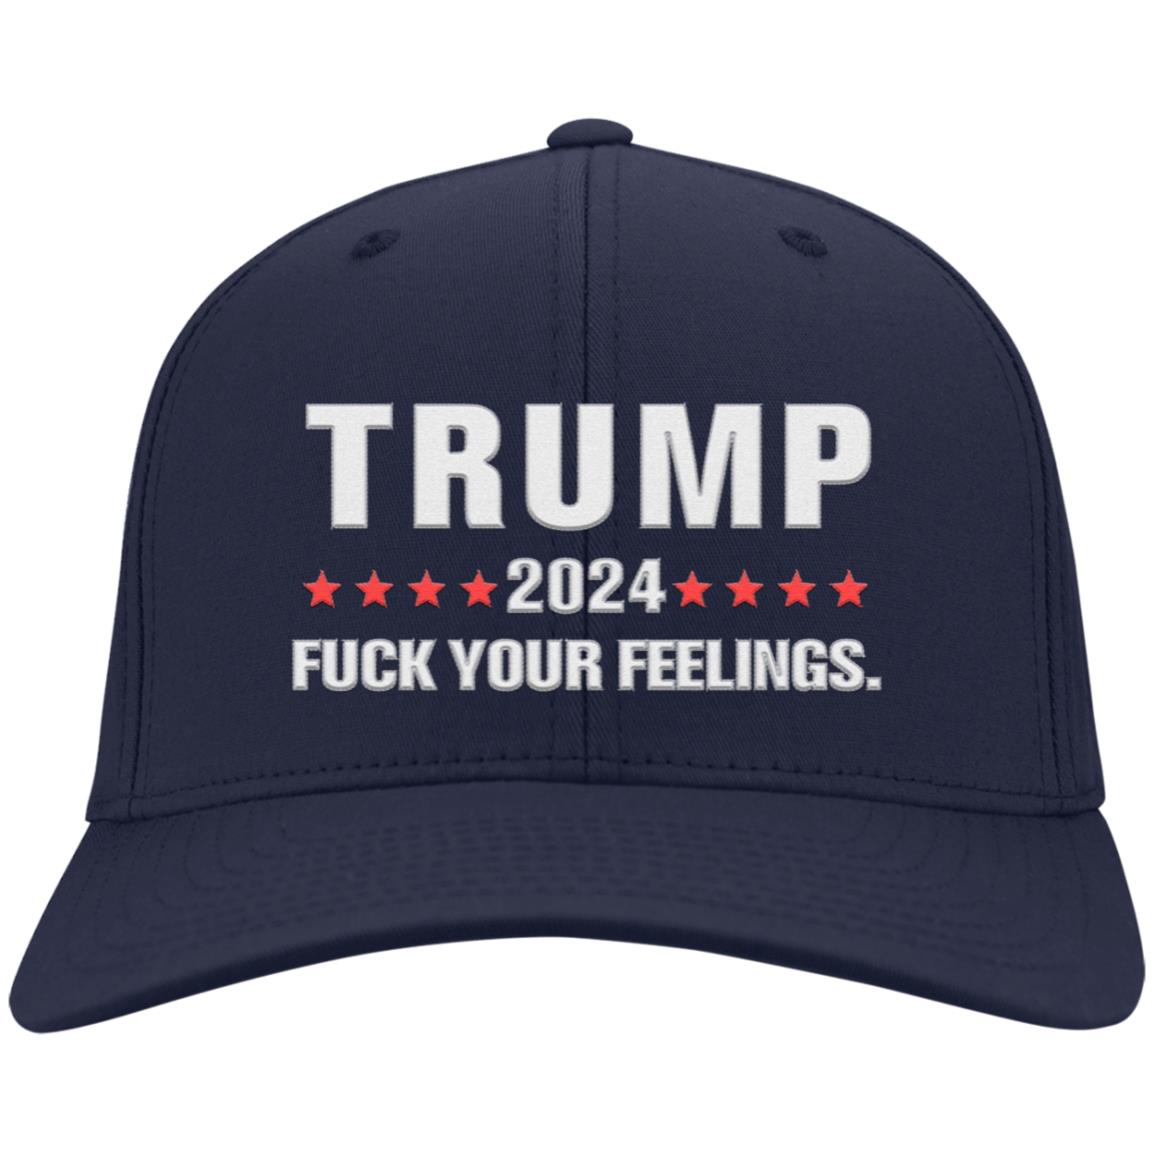 Tr*mp 2024 f*ck your feelings hat cap 6